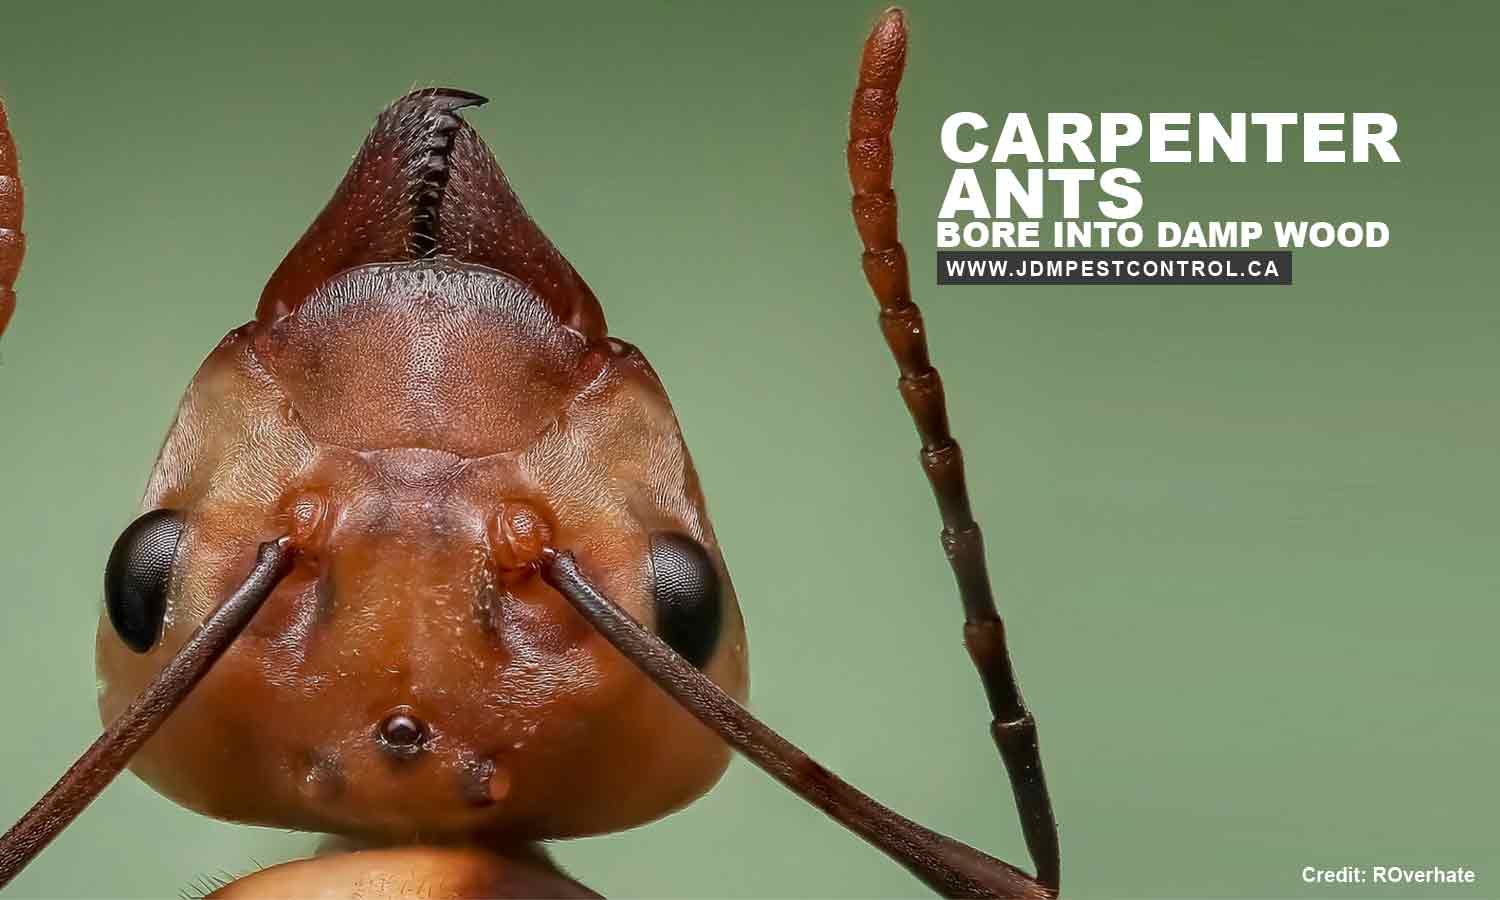 Carpenter ants bore into damp wood